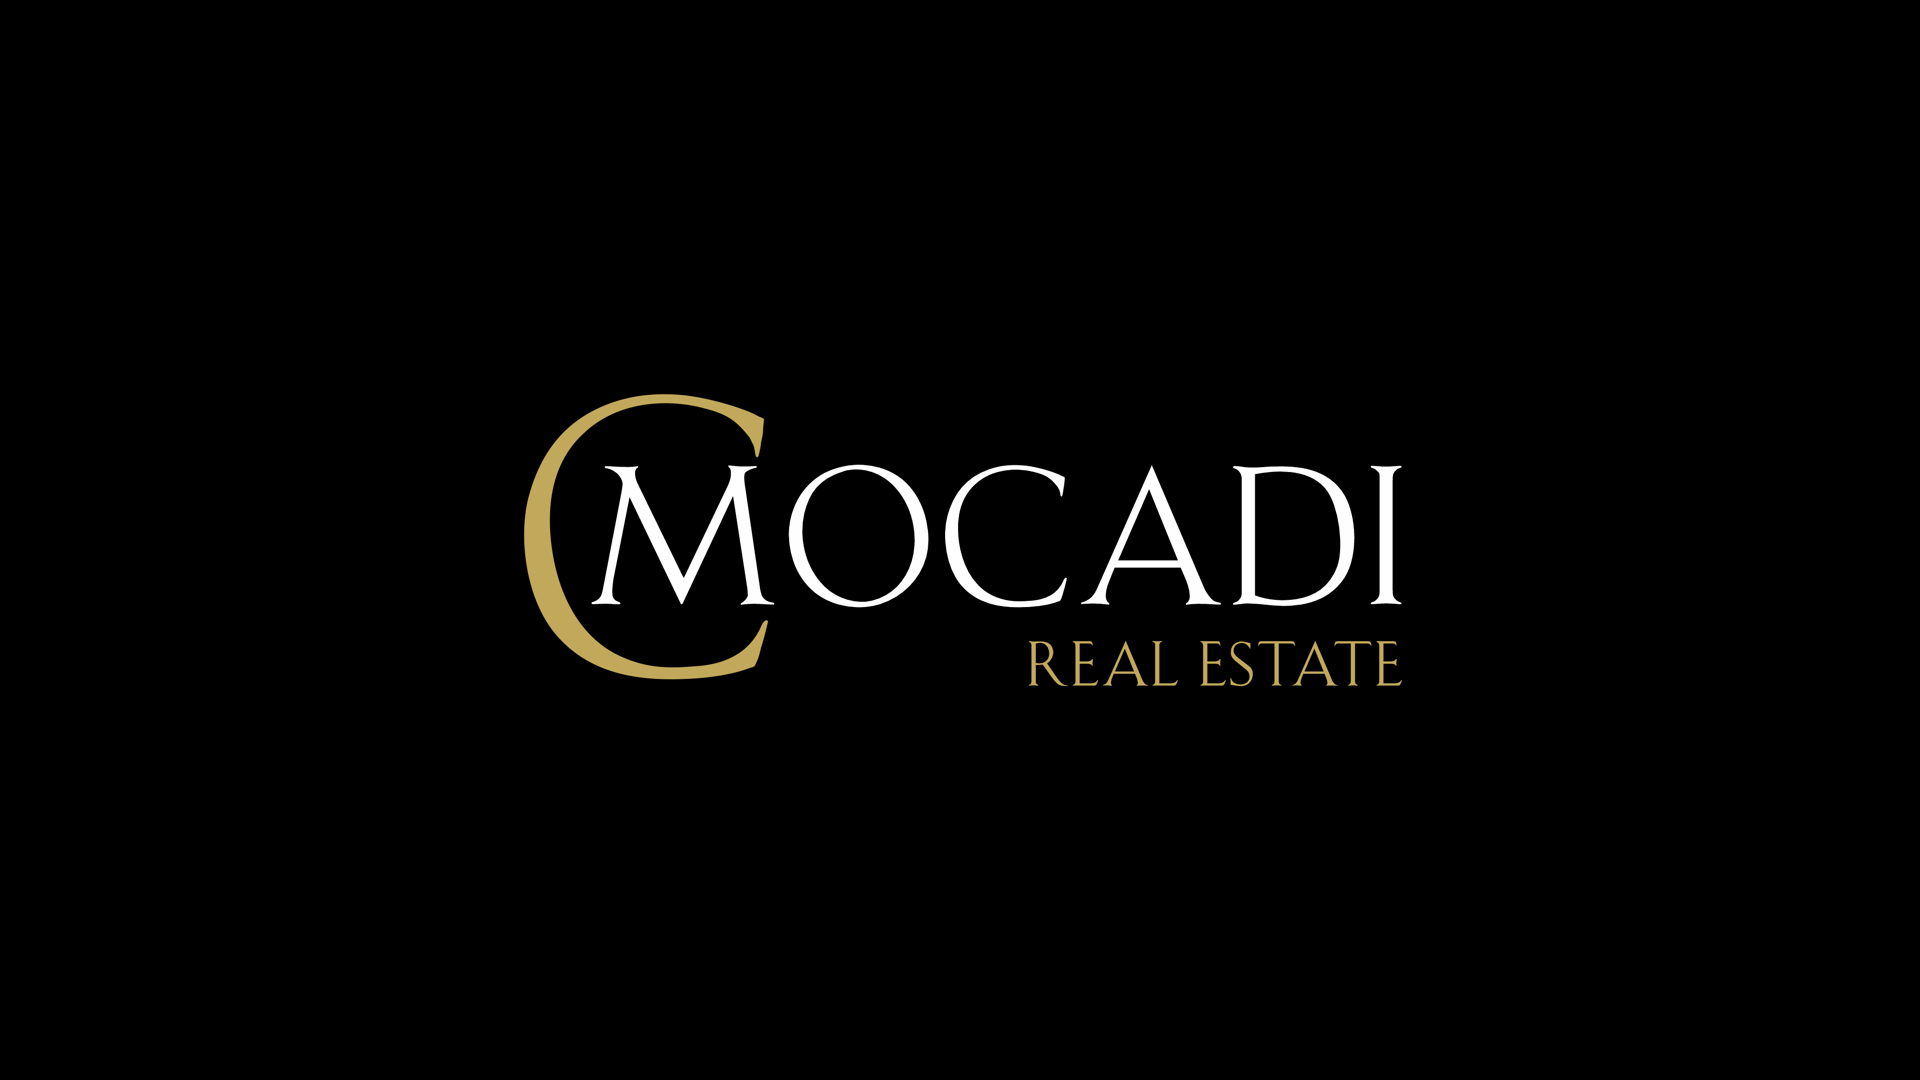 Mocadi Real Estate